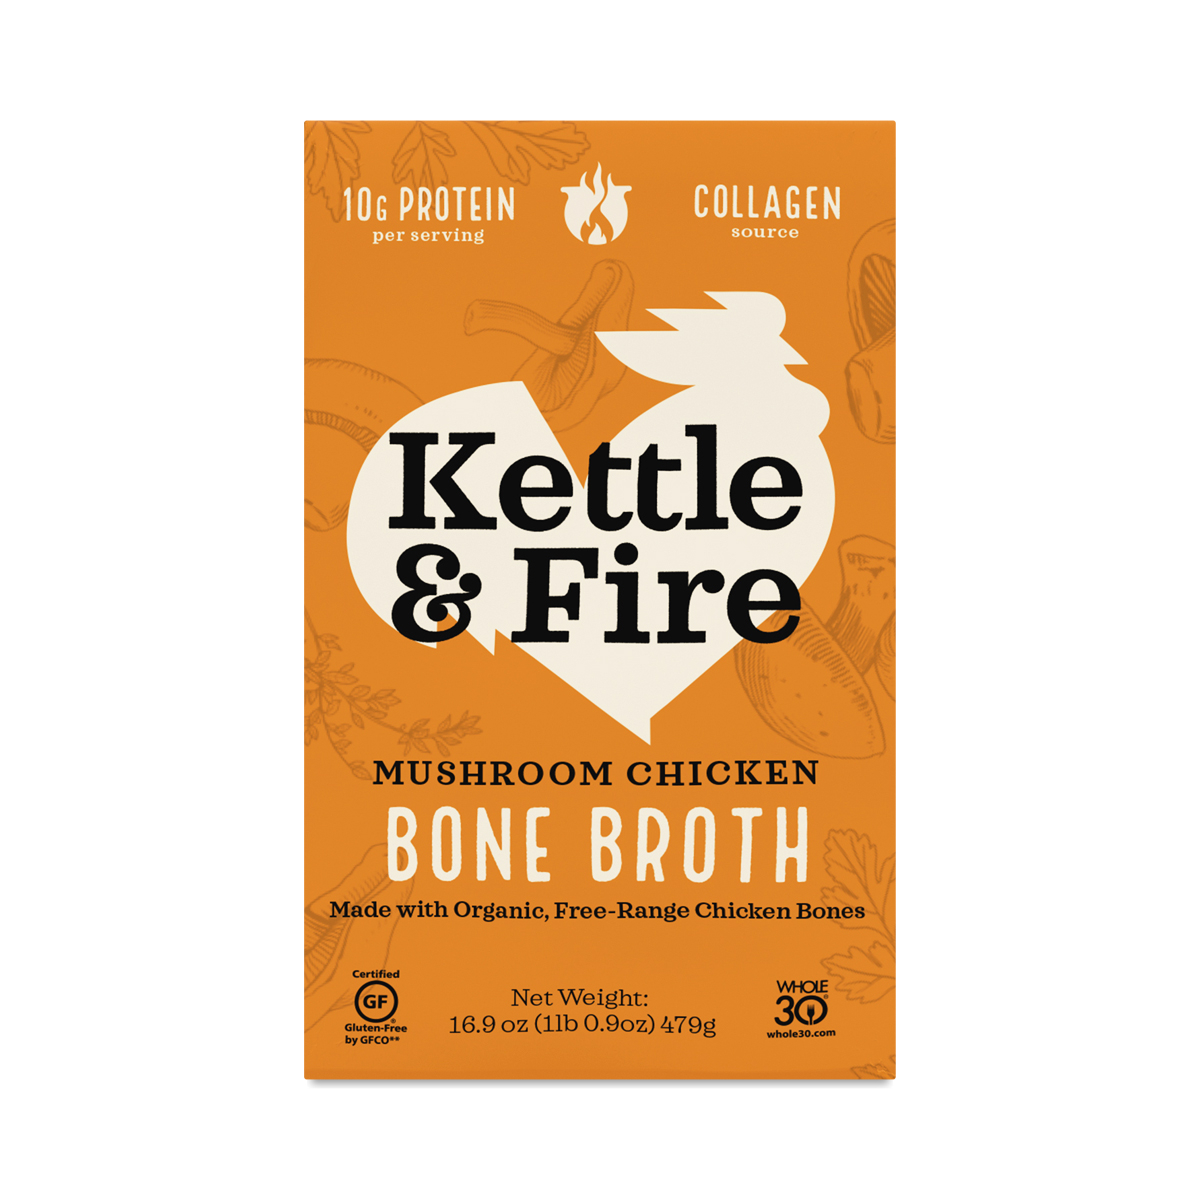 Kettle & Fire Bone Broth, Mushroom Chicken 16.9 fl oz carton